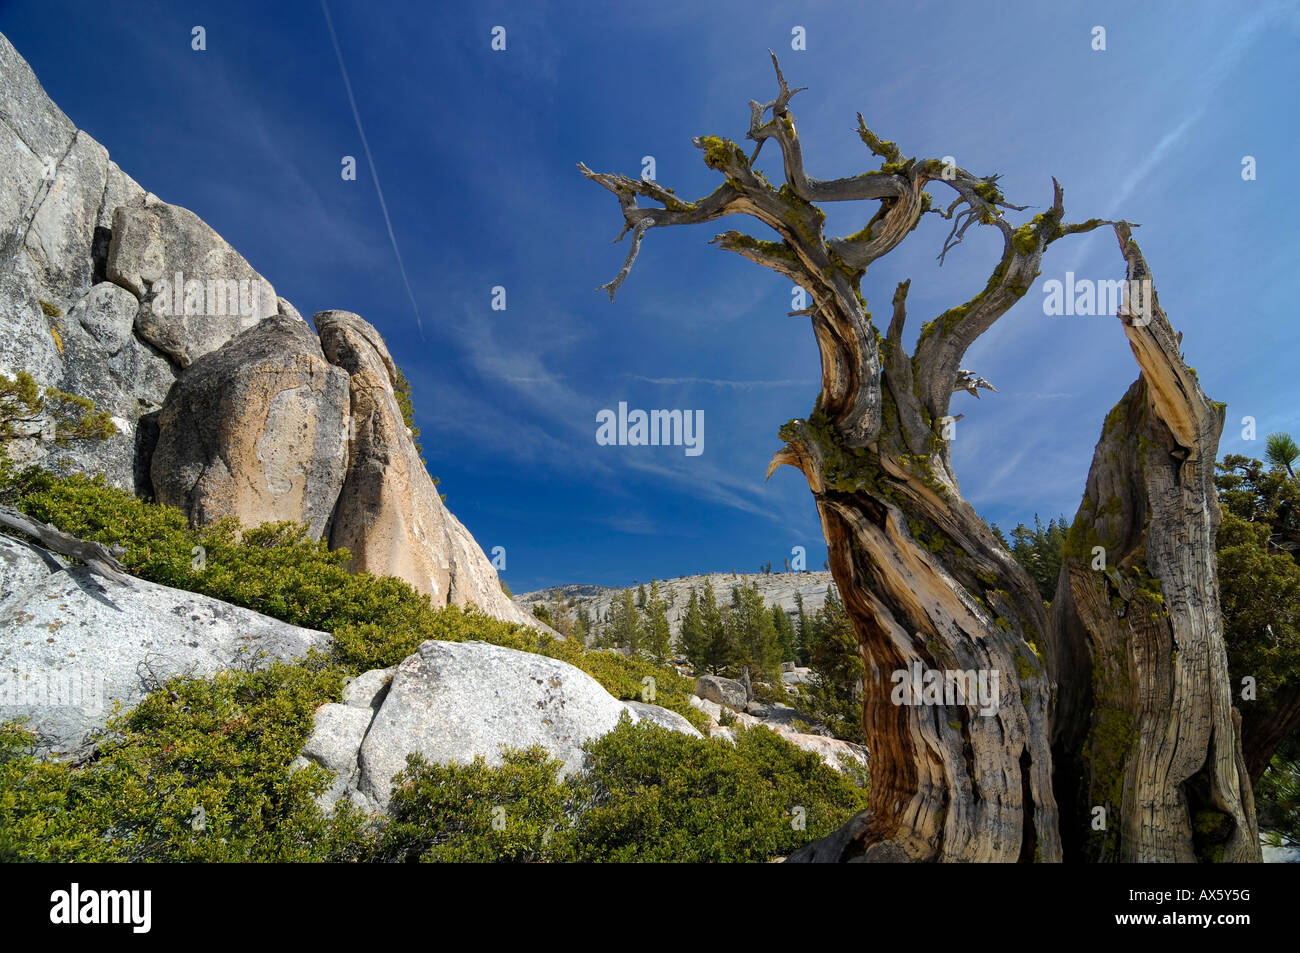 Lone gnarled old Bristlecone Pine (Pinus longaeva) tree stump in front of granite rocks at Olmsted Point, Yosemite National Par Stock Photo